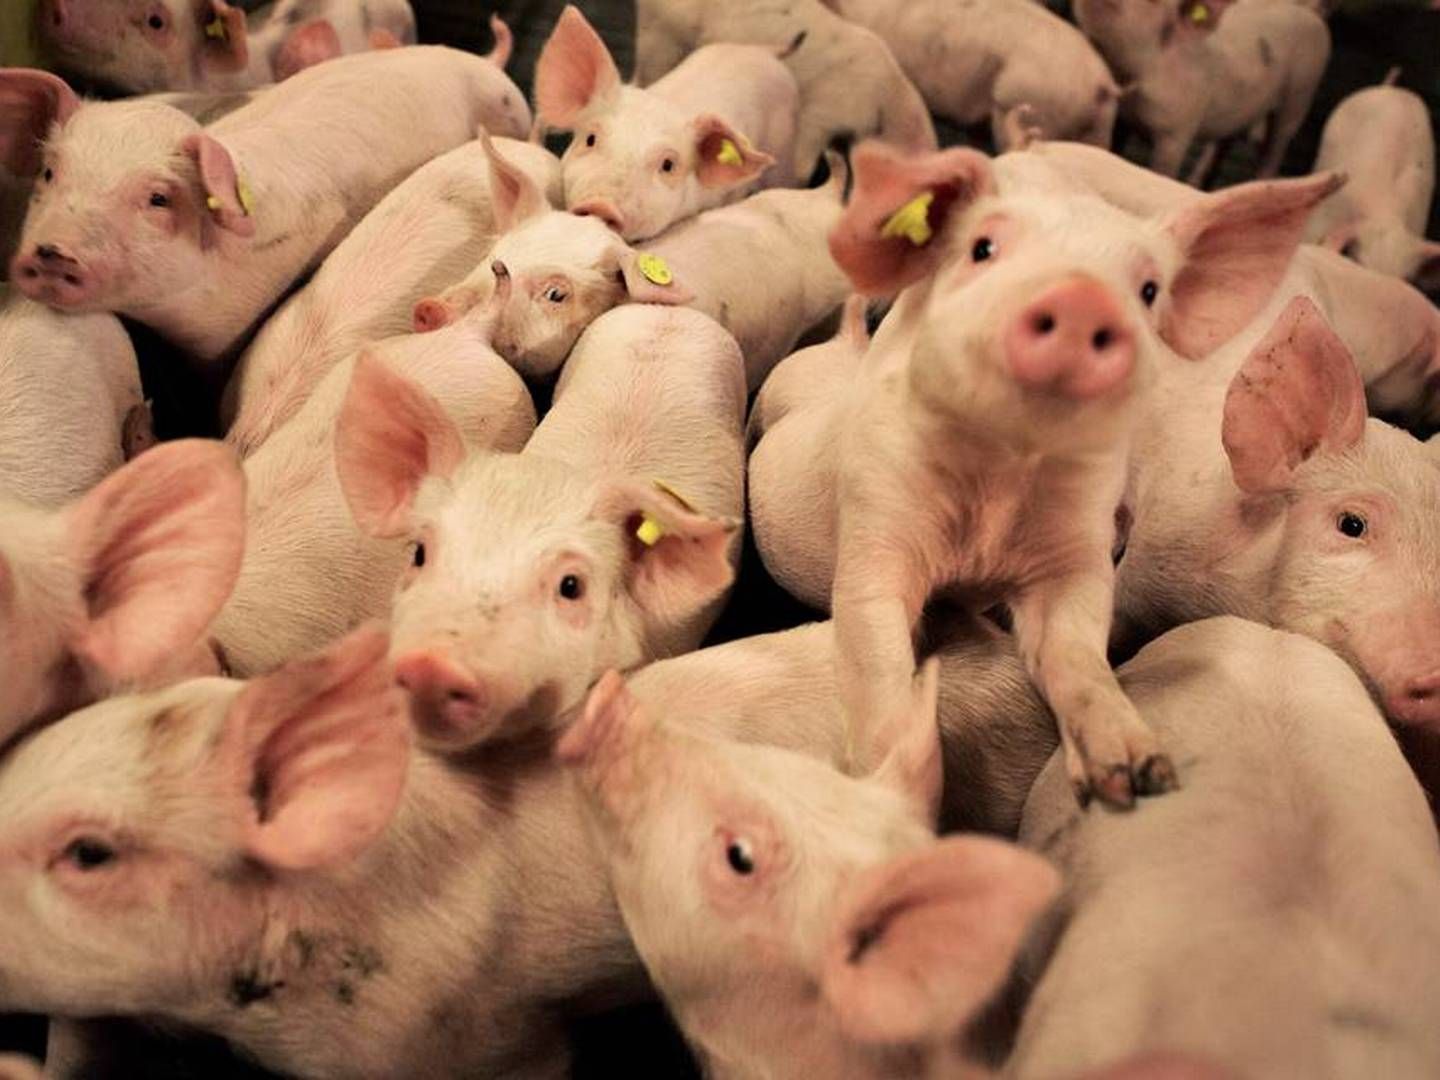 Hos Goodvalley har Nicolai Jepsen bl.a. haft ansvaret for den polske griseproduktion. | Foto: Charlotte de la Fuente